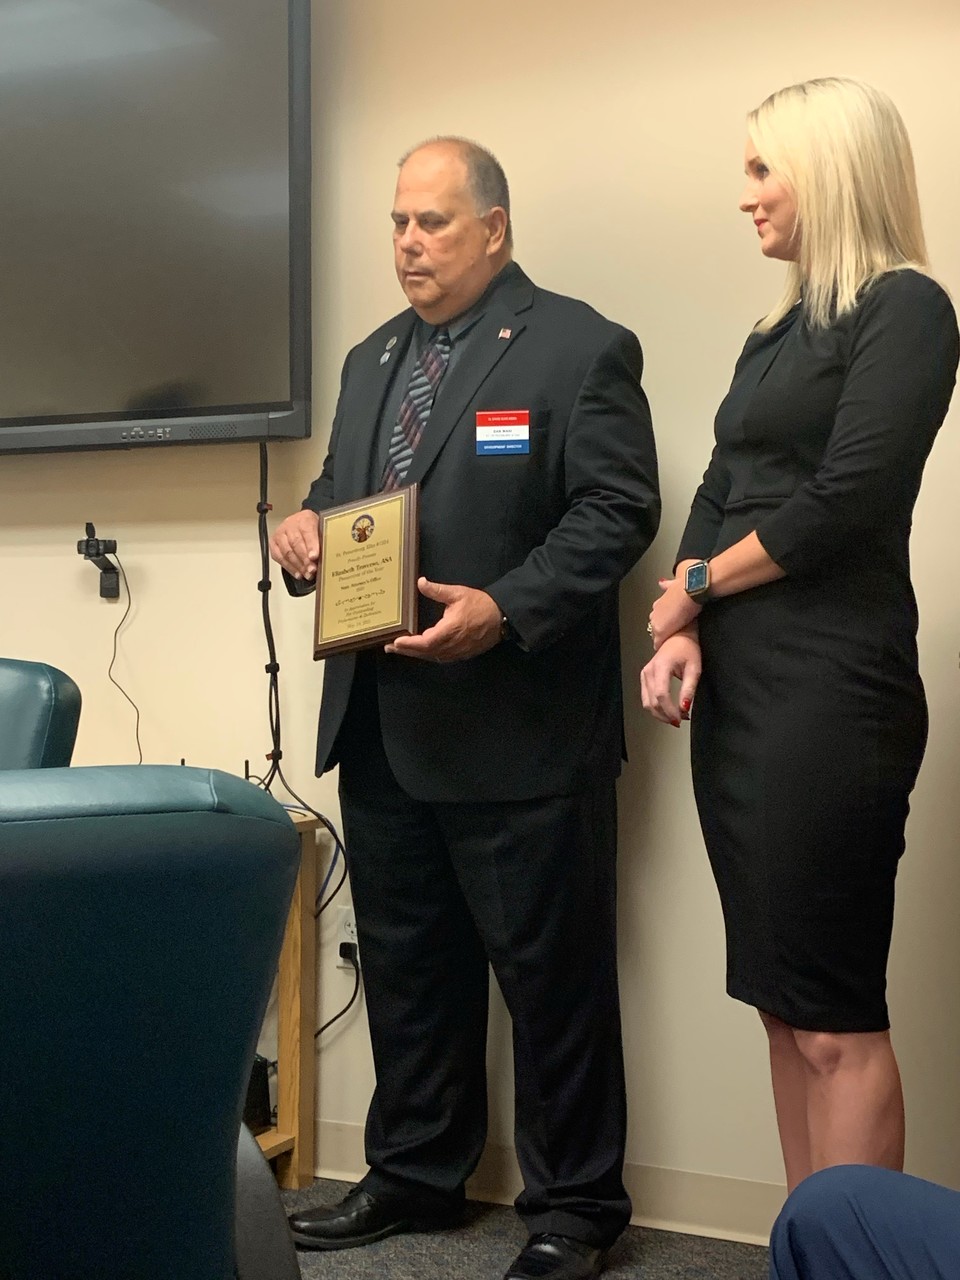 Elizabeth Traverso awarded the St. Petersburg Elks #1224 Prosecutor of the Year Award